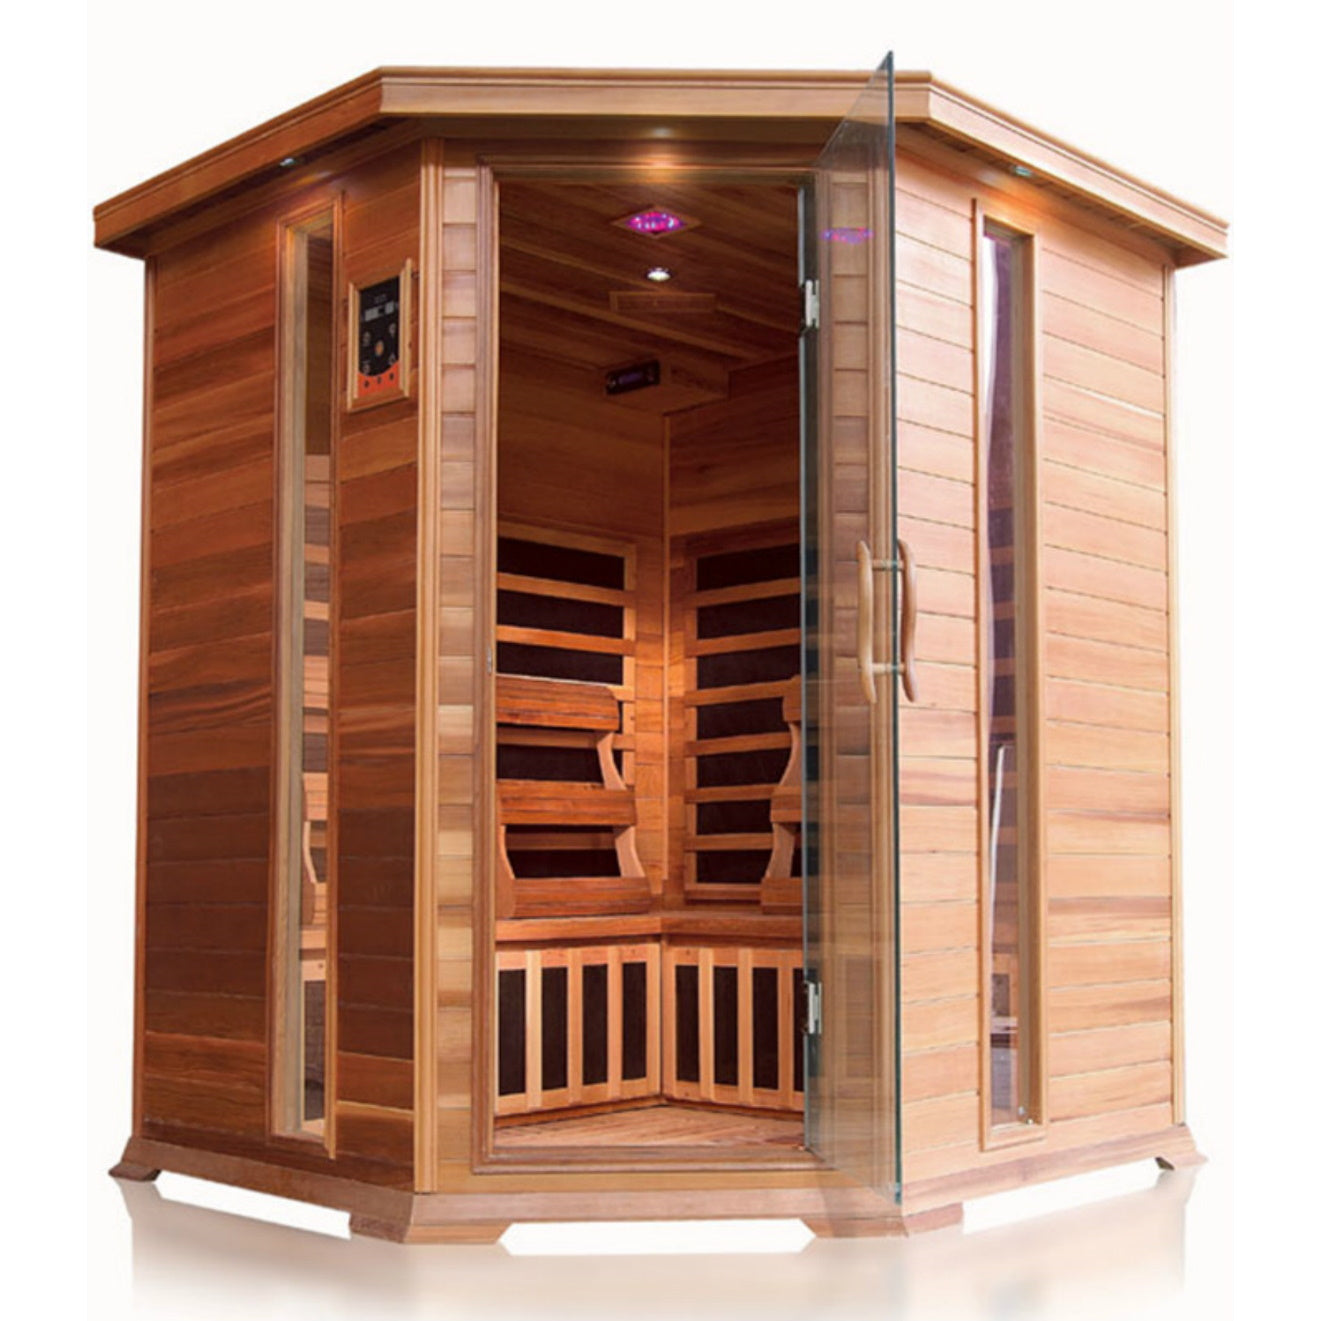 SunRay Sauna 4 Person Bristol Bay FAR Infrared Corner Sauna - Natural Canadian Red Cedar Wood with glass door, 10 carbon-nano heaters, Dual LED control panels, Recessed exterior lighting, LED Reading Lamp, Ergonomic Backrest - HL400KC